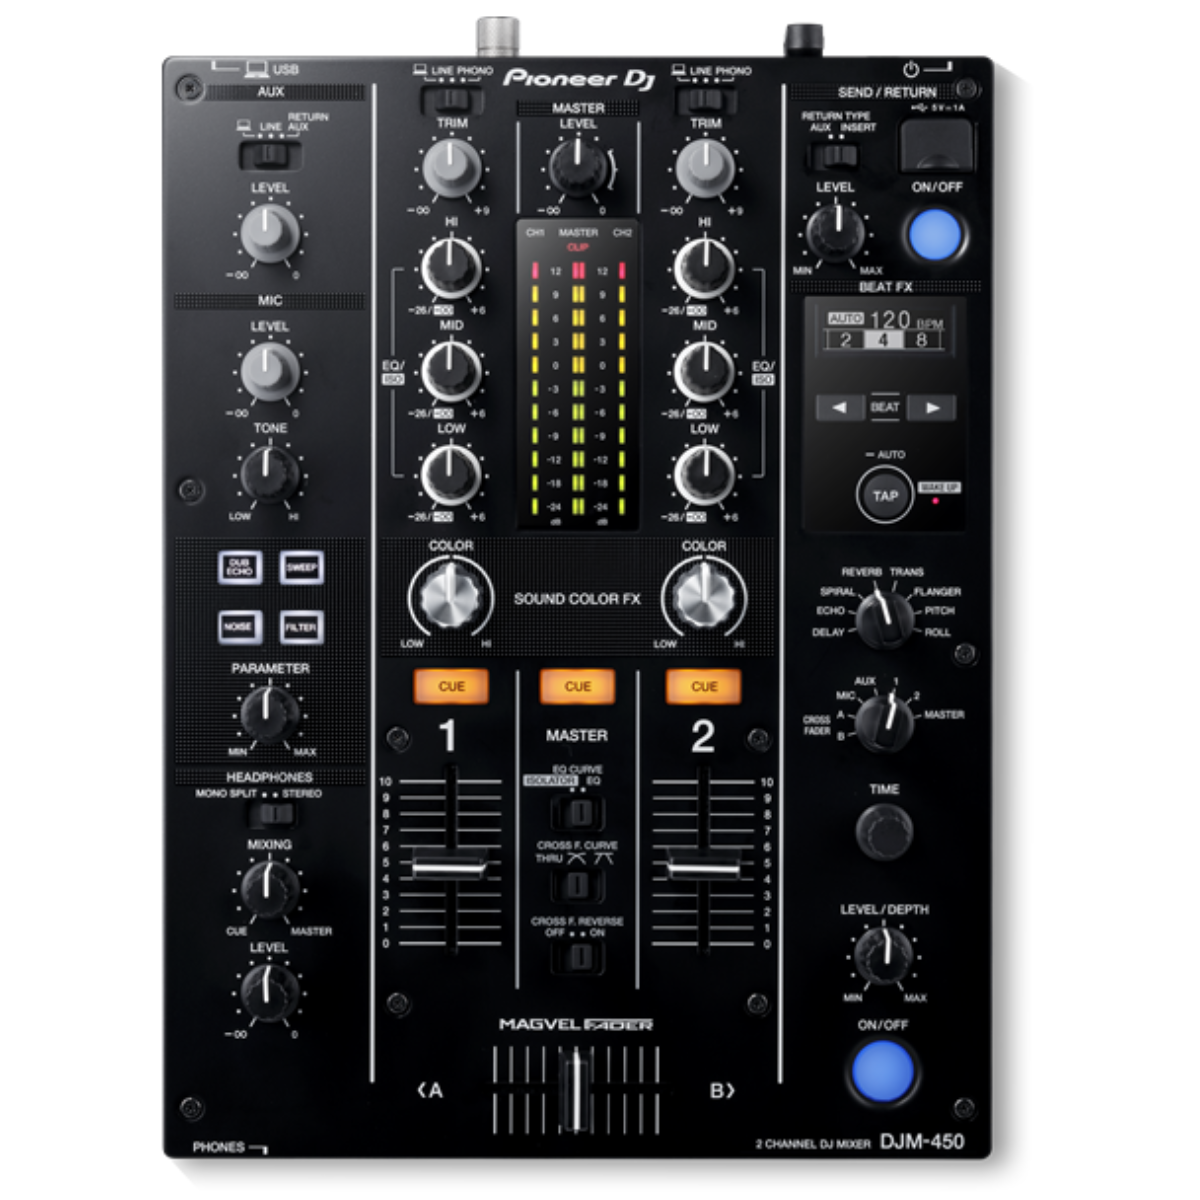 Pioneer DJM-450 (香港行貨) DJ混音器 2頻道 配備Beat FX